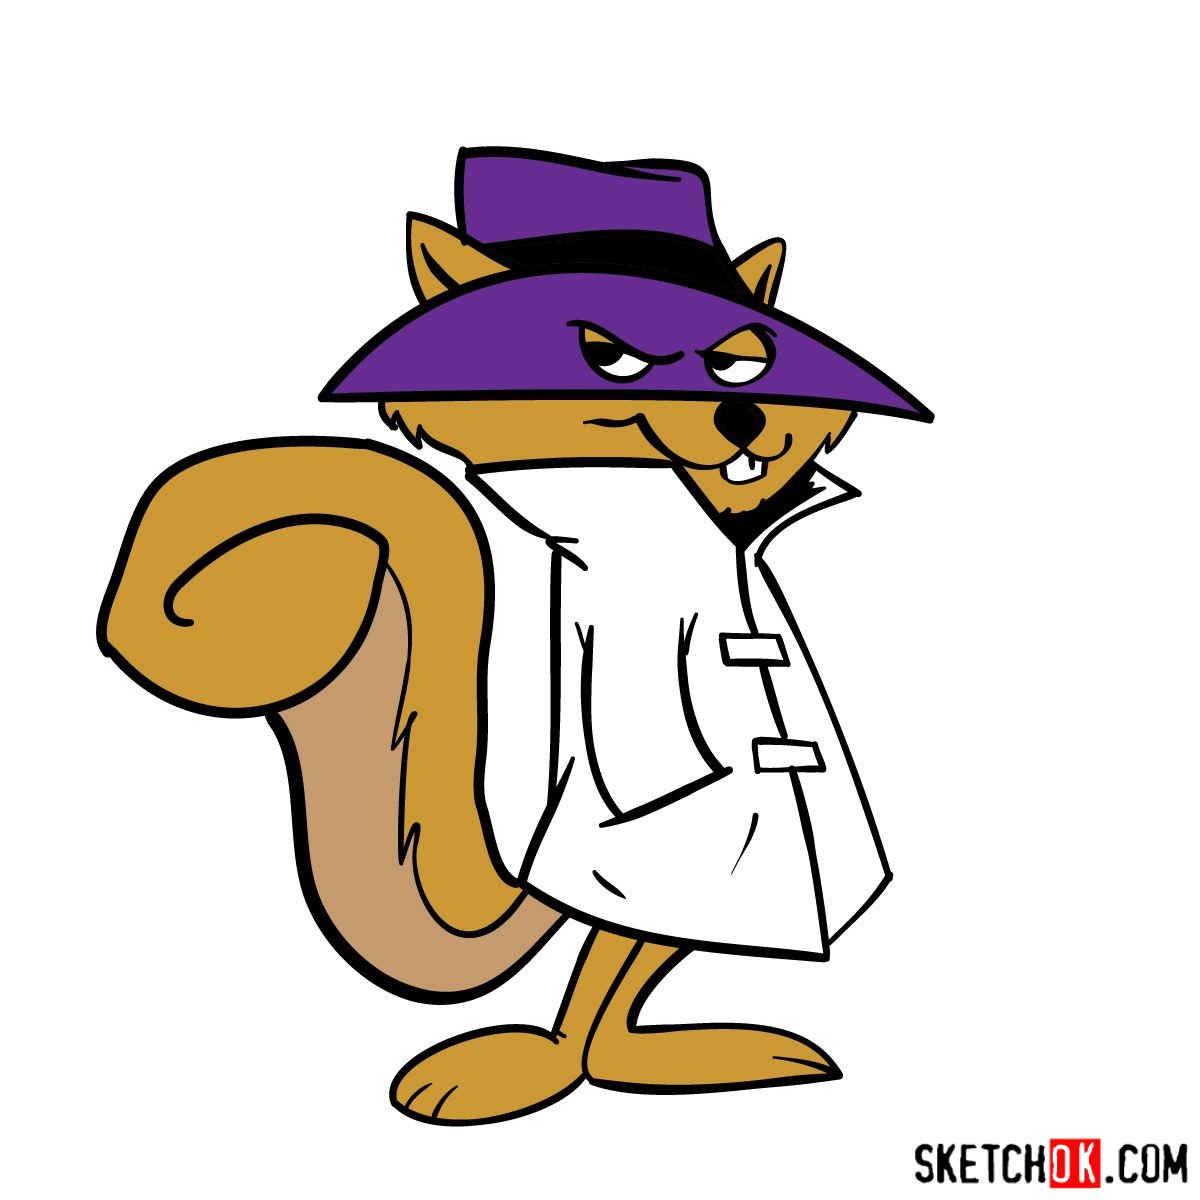 Secret Squirrel Archives - Sketchok easy drawing guides